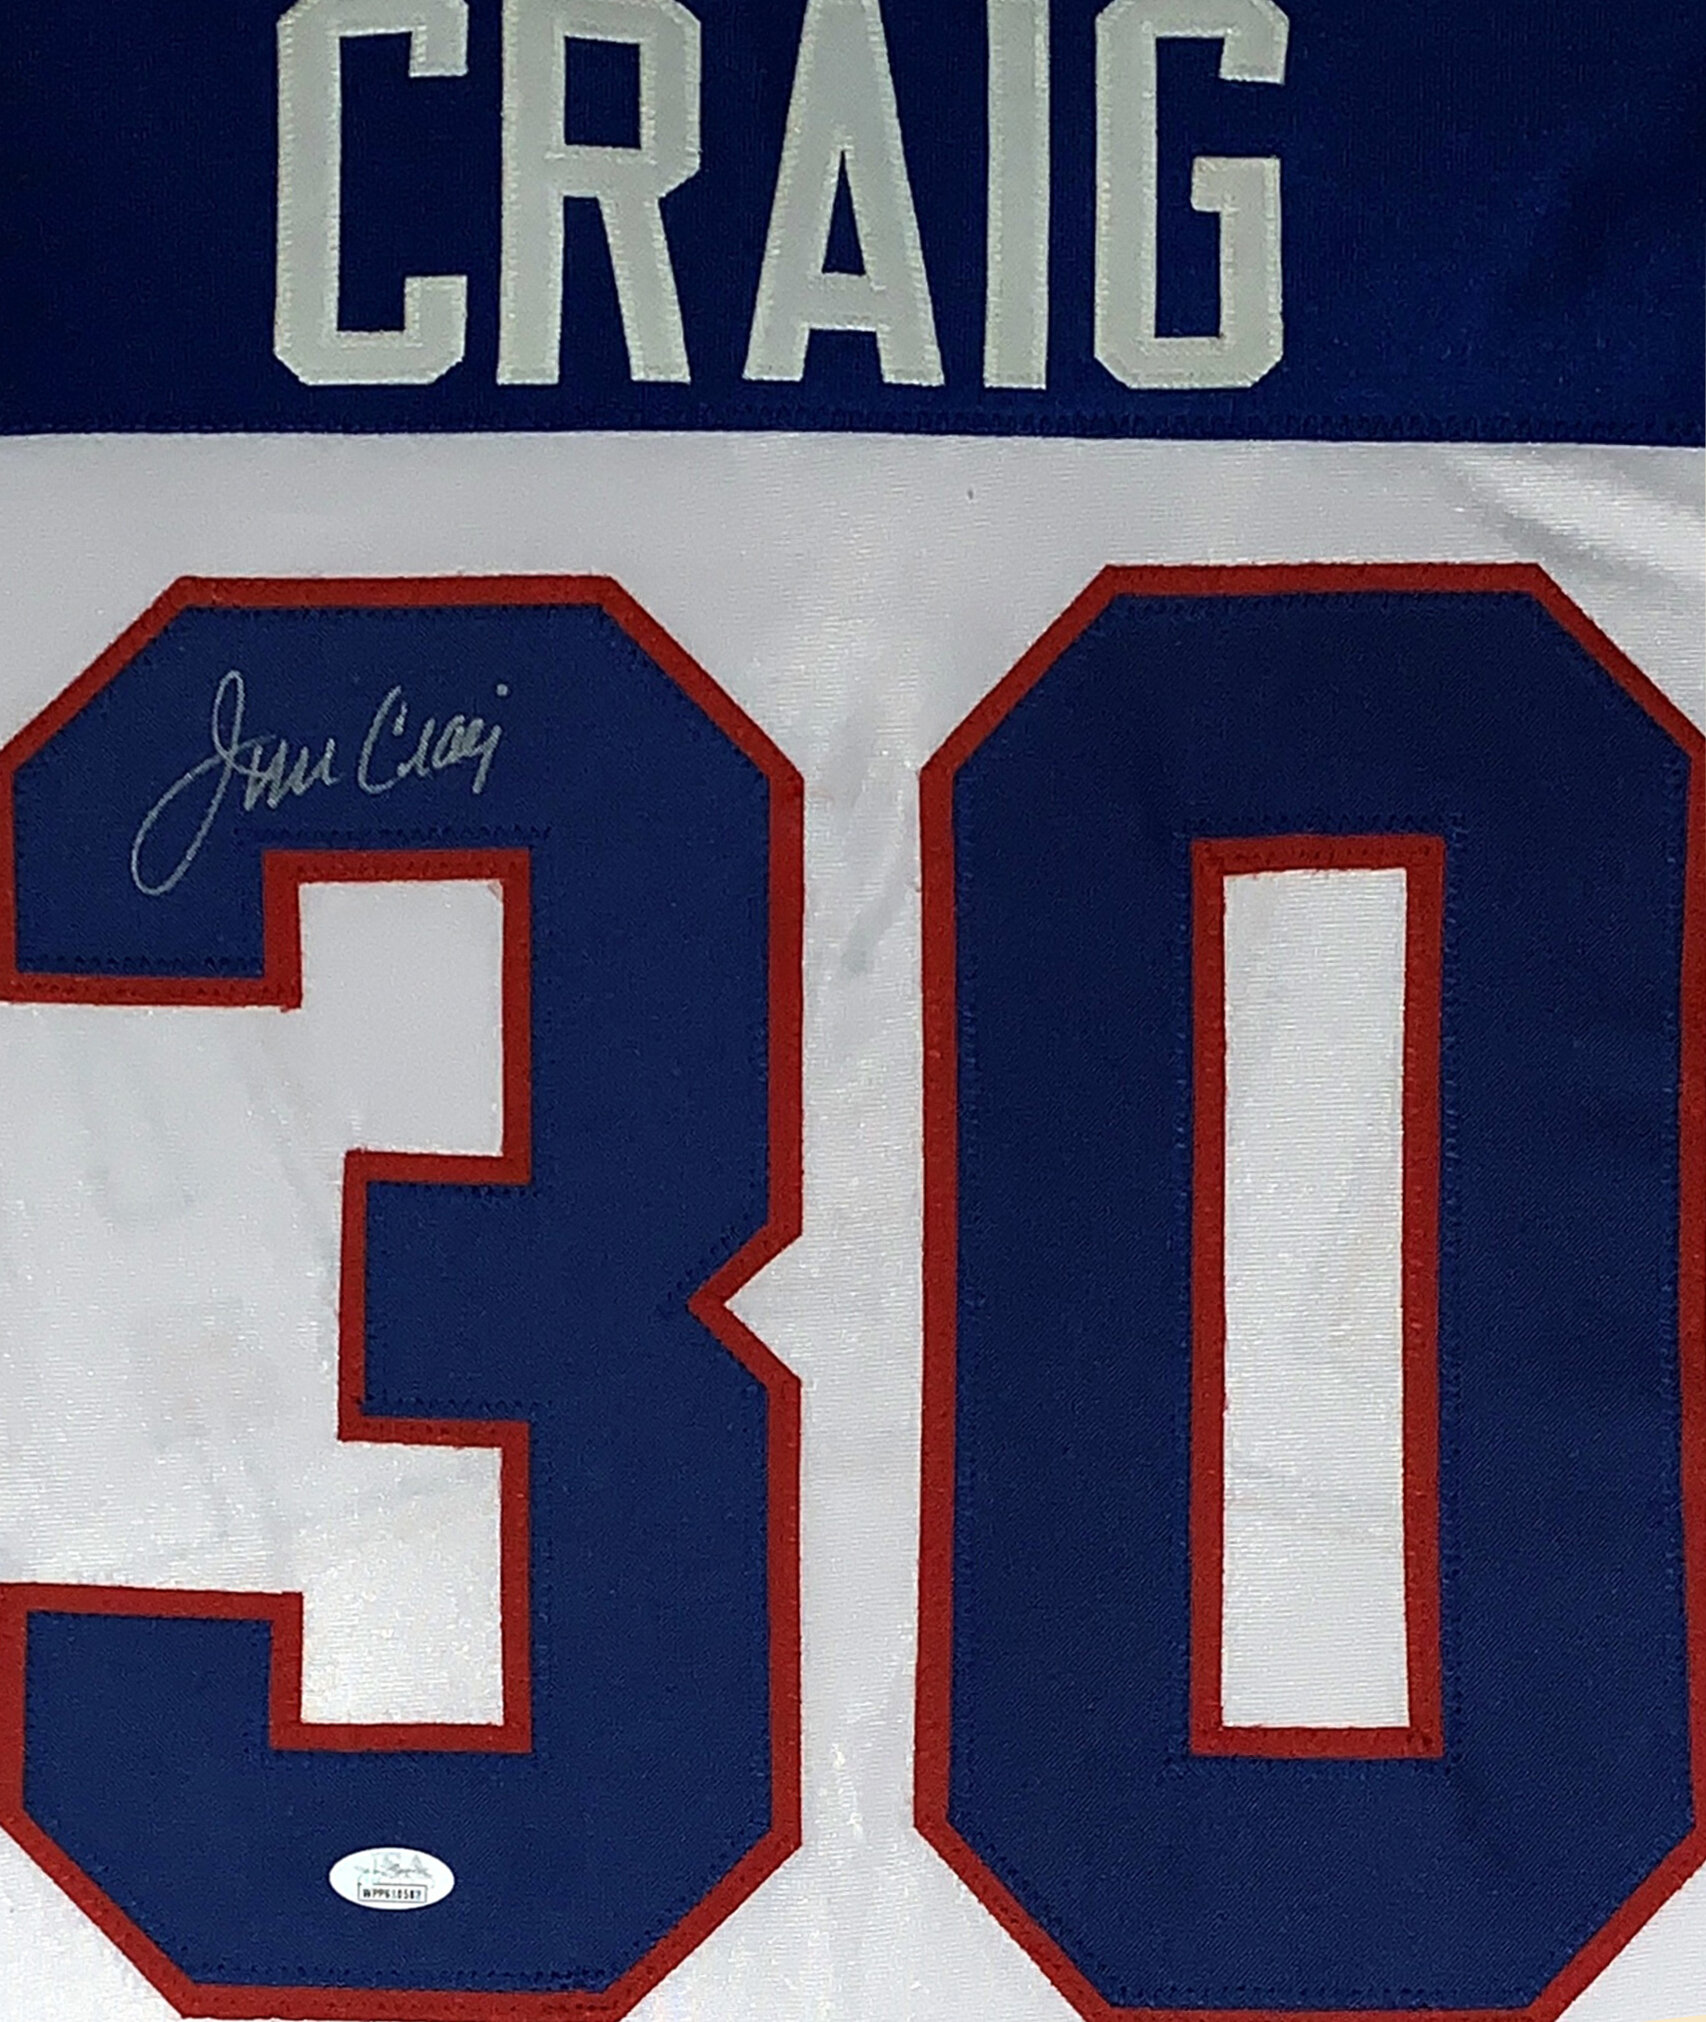 Jim Craig Signed Team USA / Miracle on Ice Jersey JSA COA 1980